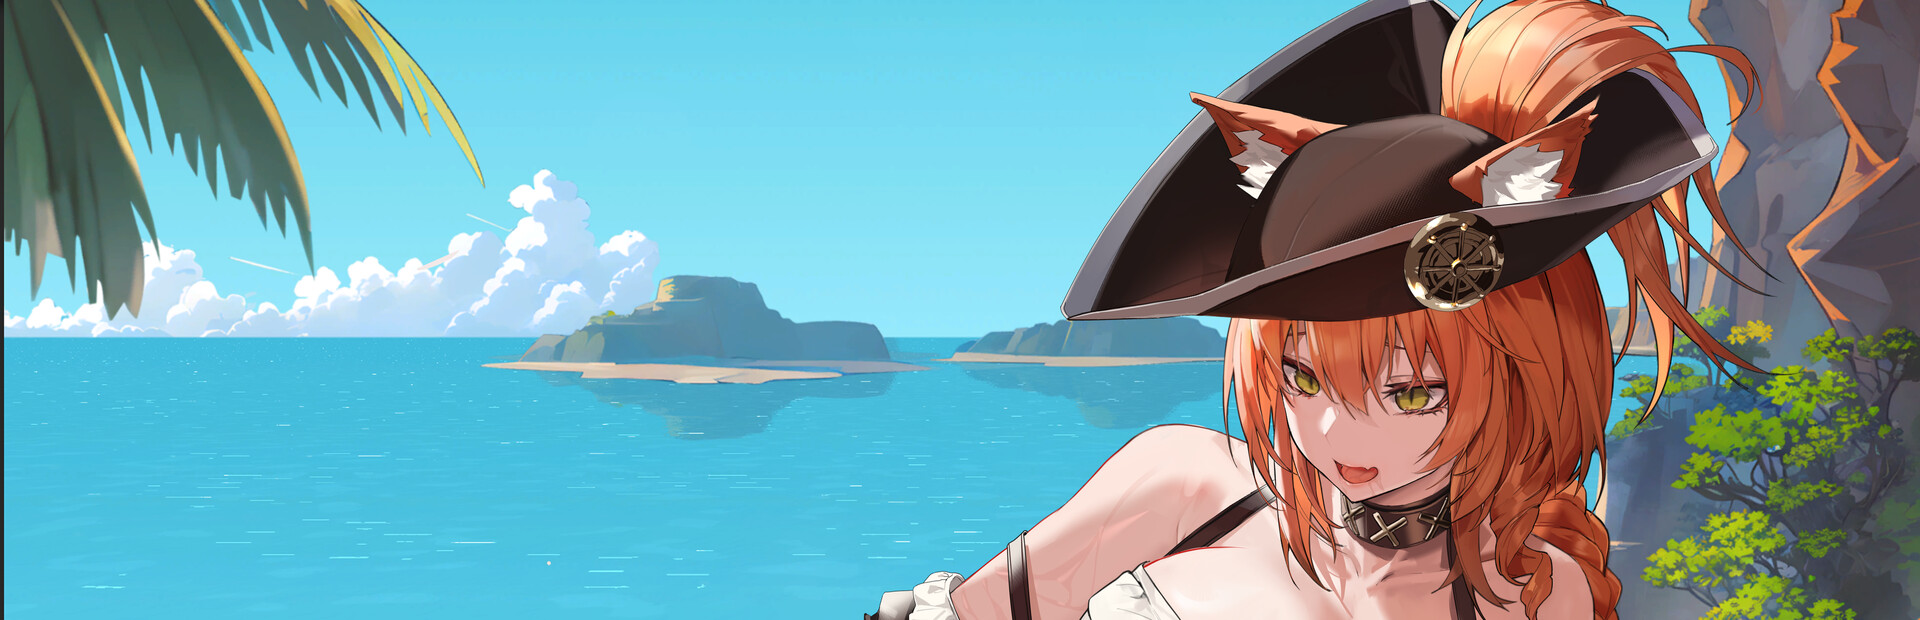 Miss Neko: Pirates cover image